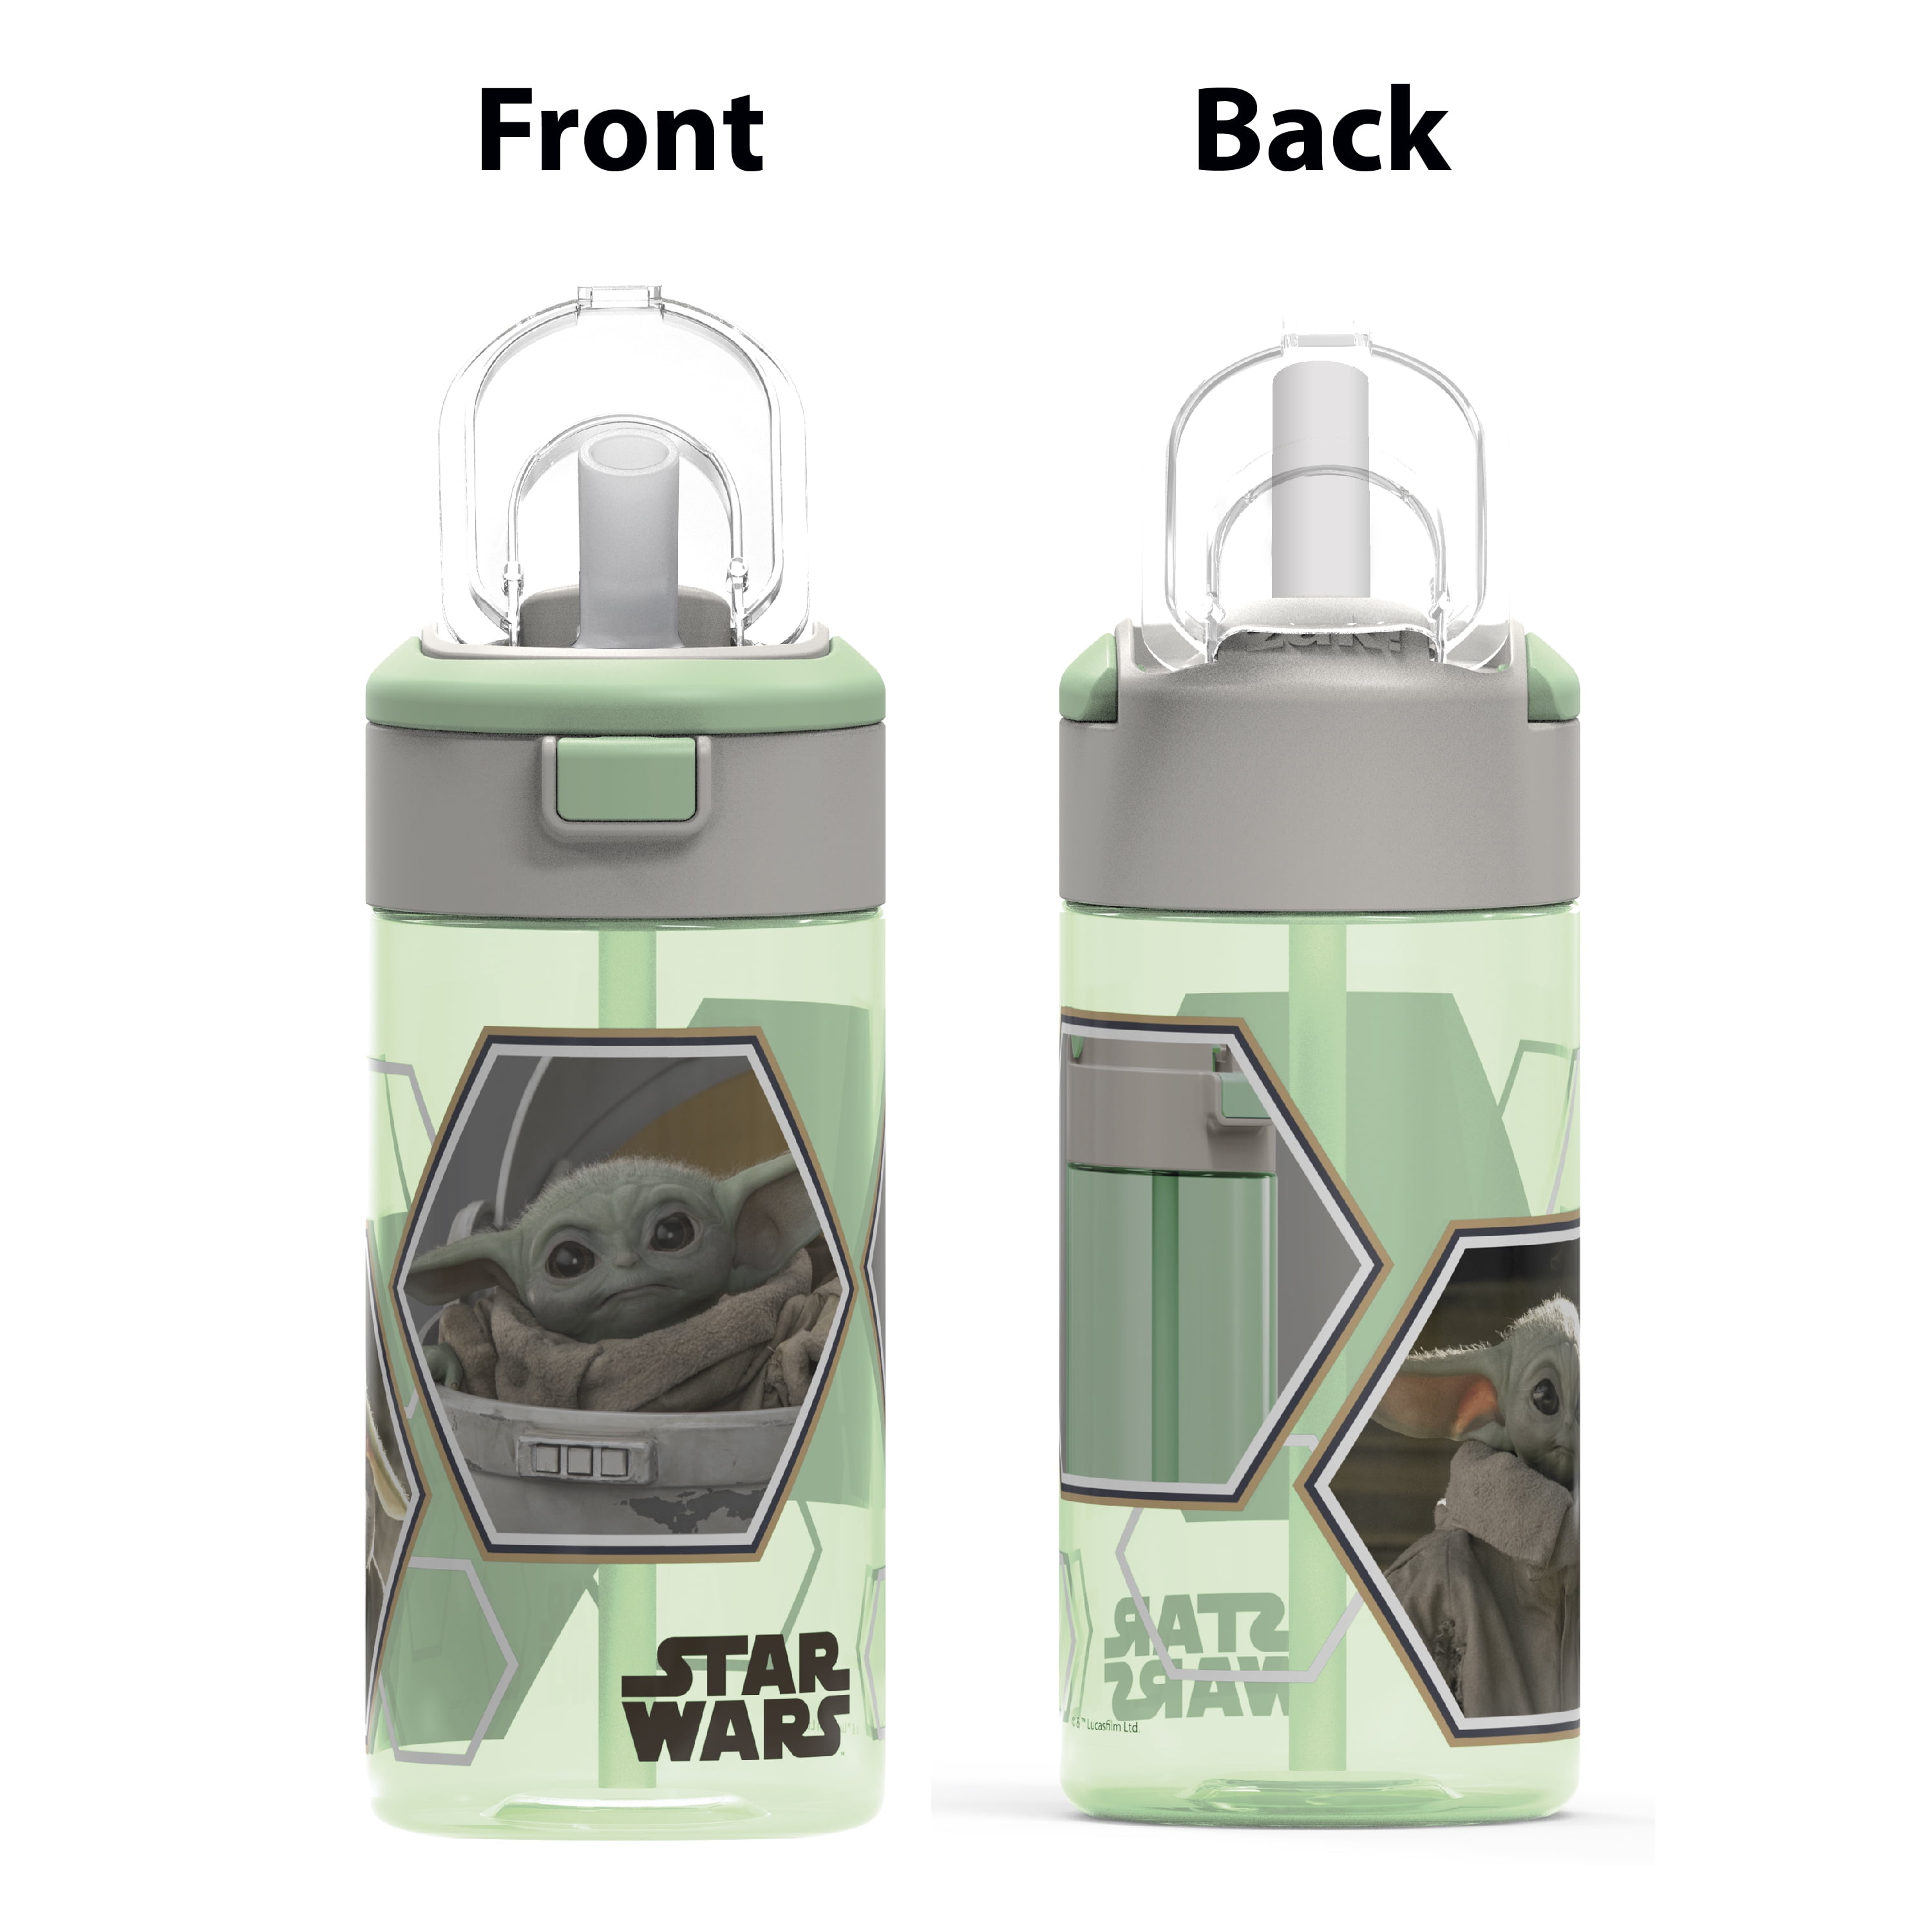 Zak Designs Recalls Water Bottles Due to Choking Hazard; Sold Exclusively  at Target Stores